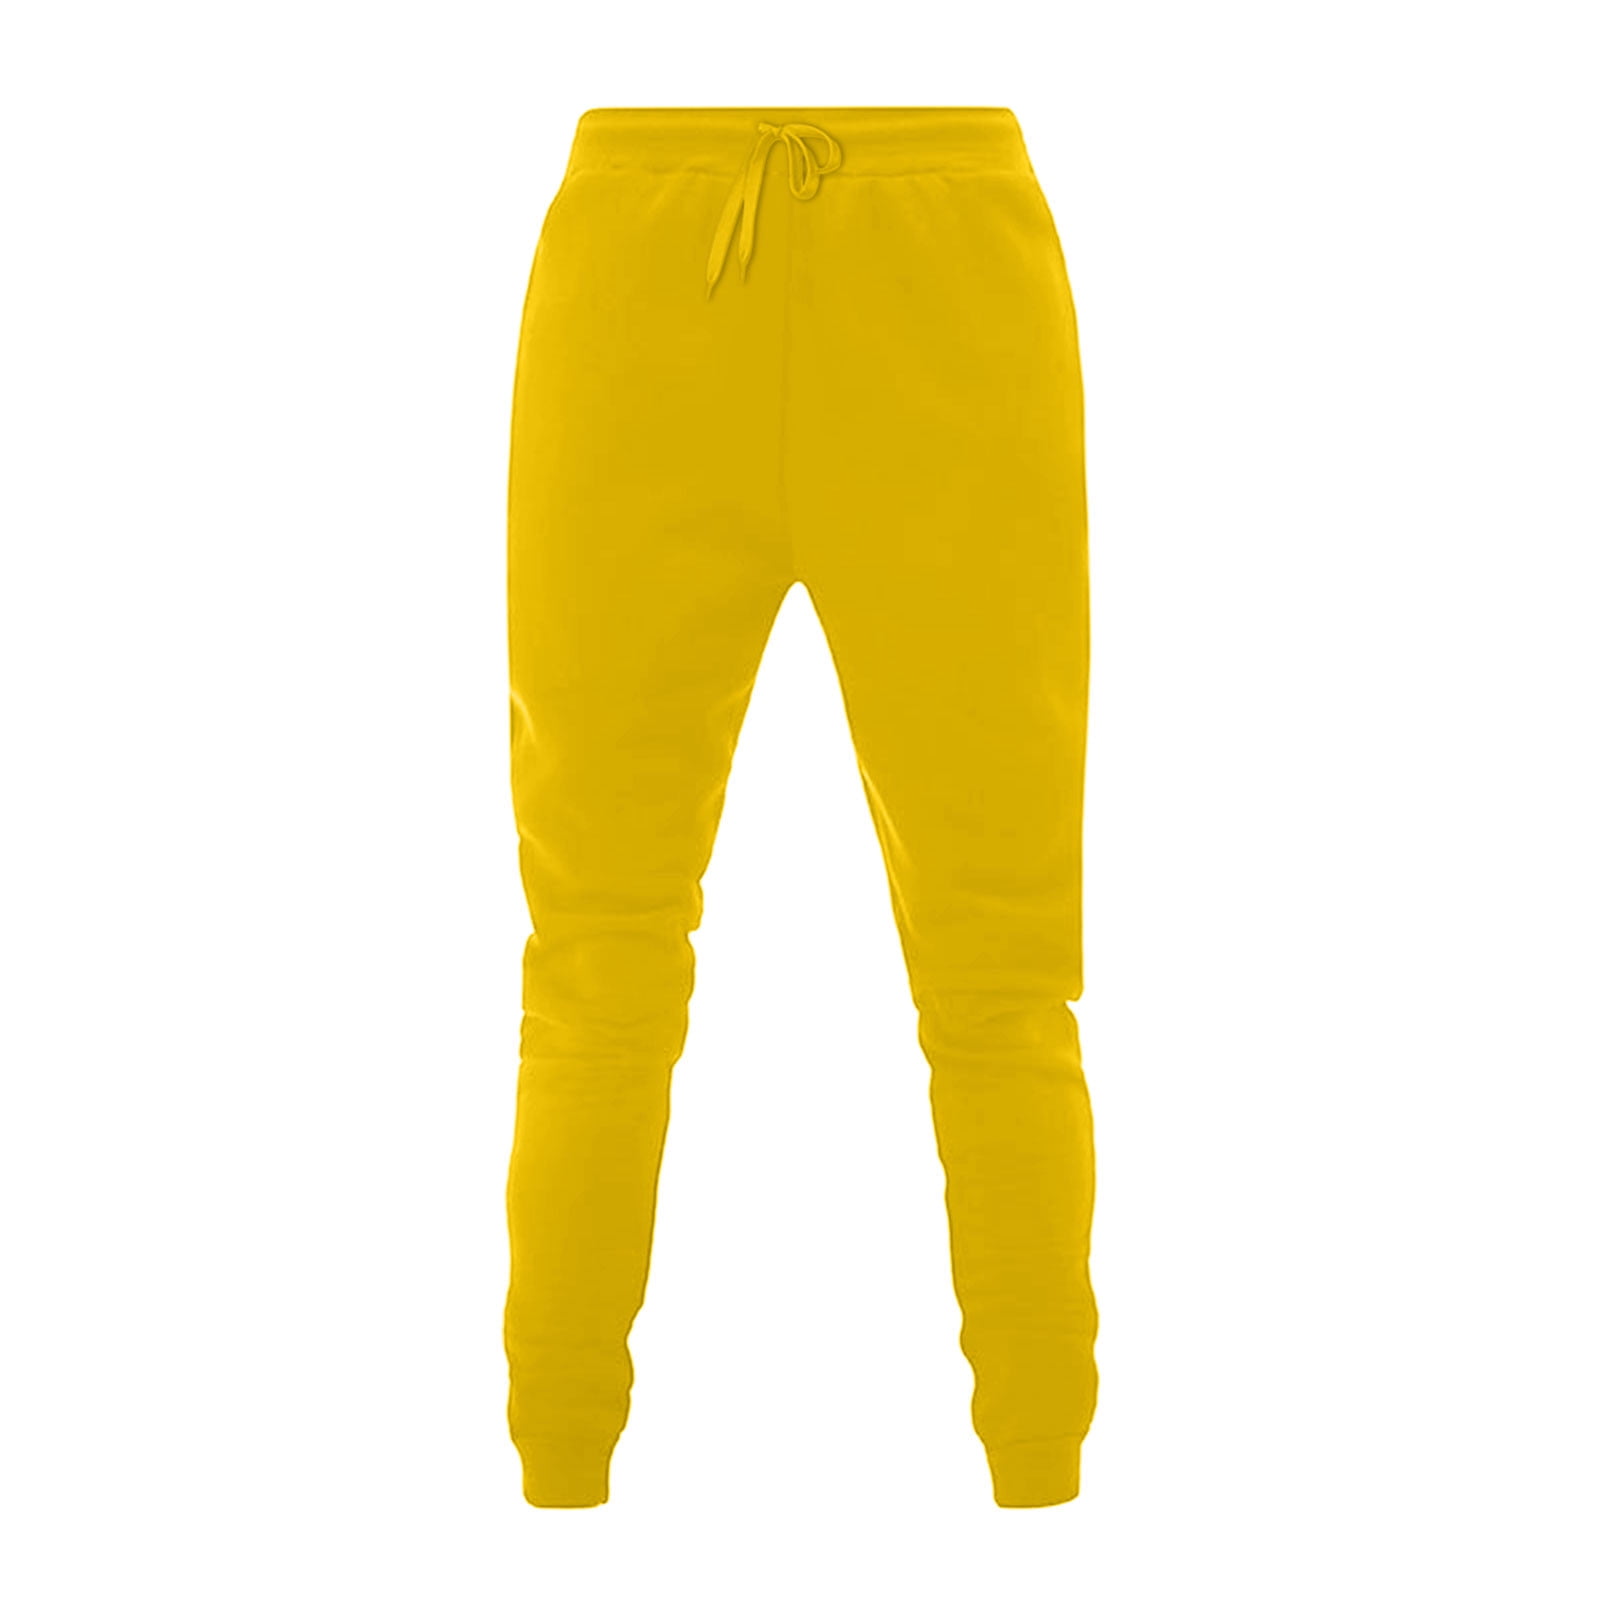 ZyeKqe Women's Sports Pants Fleece Elastic Waist Solid Color Drawstring ...